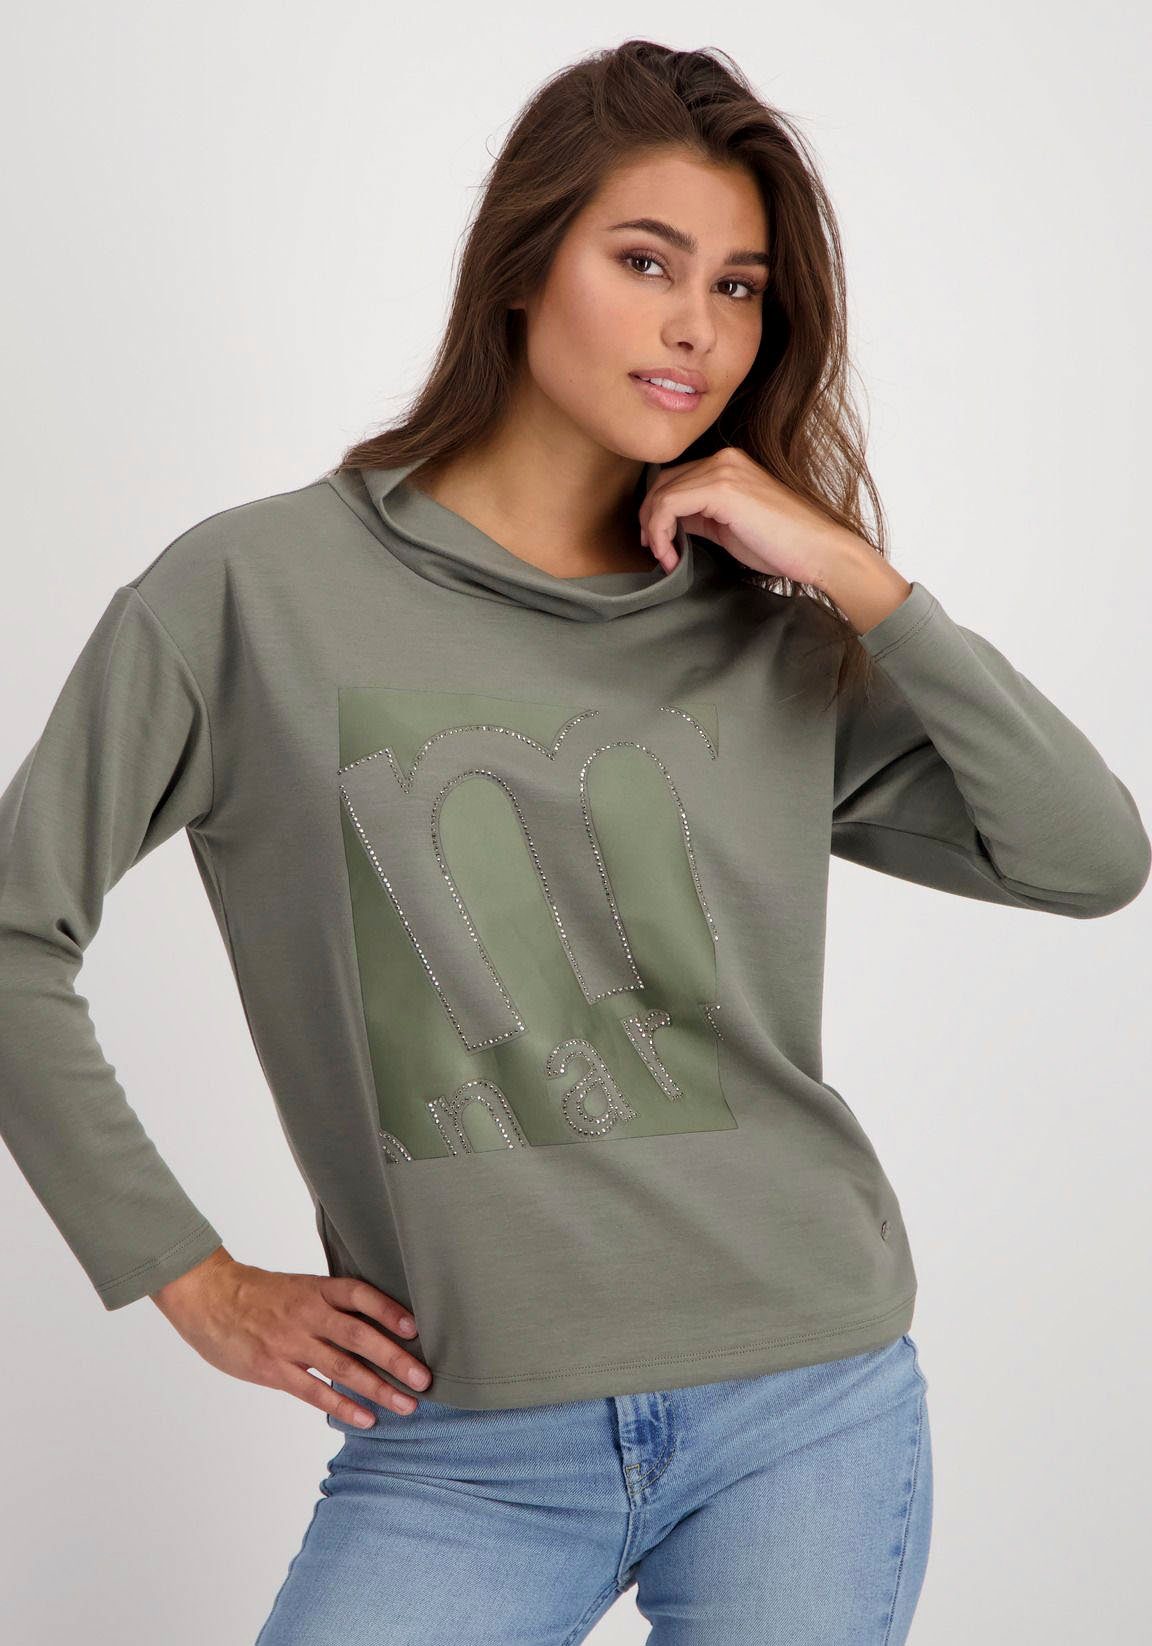 Satindruck green Satindruck frozen Sweatshirt tonigem Sweatshirt mit Monari